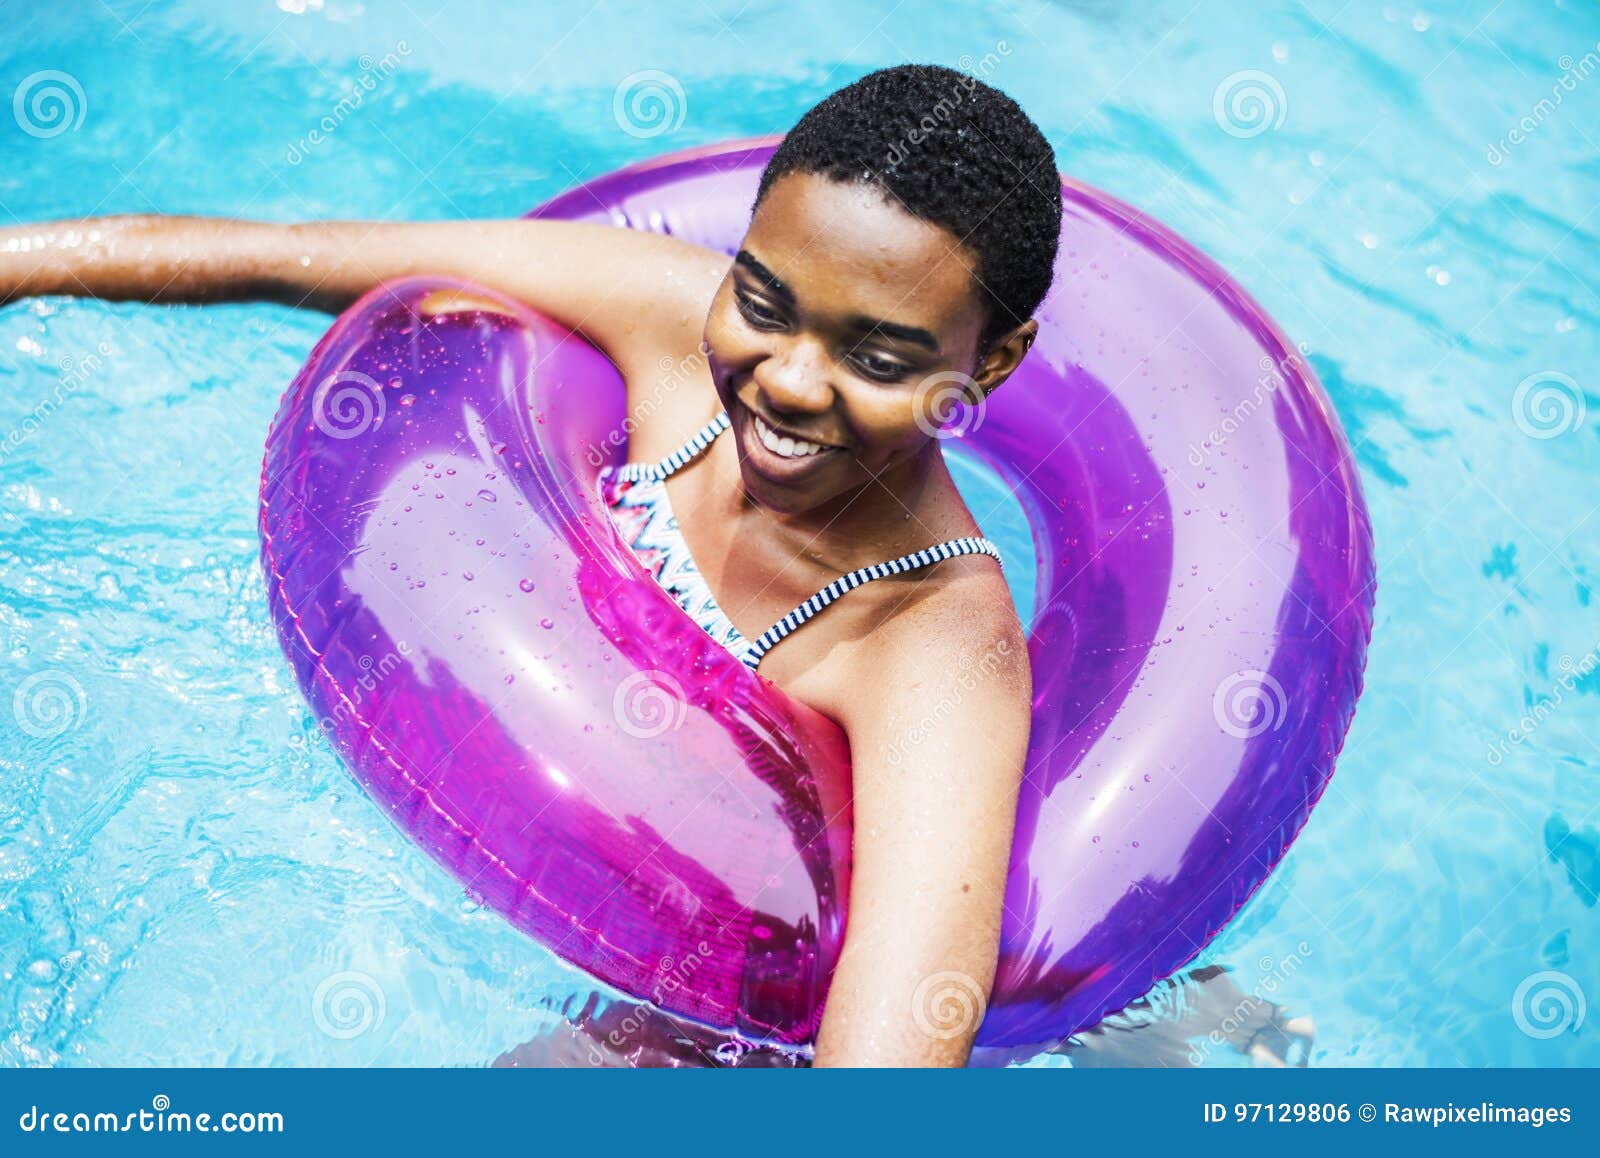 https://thumbs.dreamstime.com/z/closeup-black-woman-floating-tube-pool-97129806.jpg